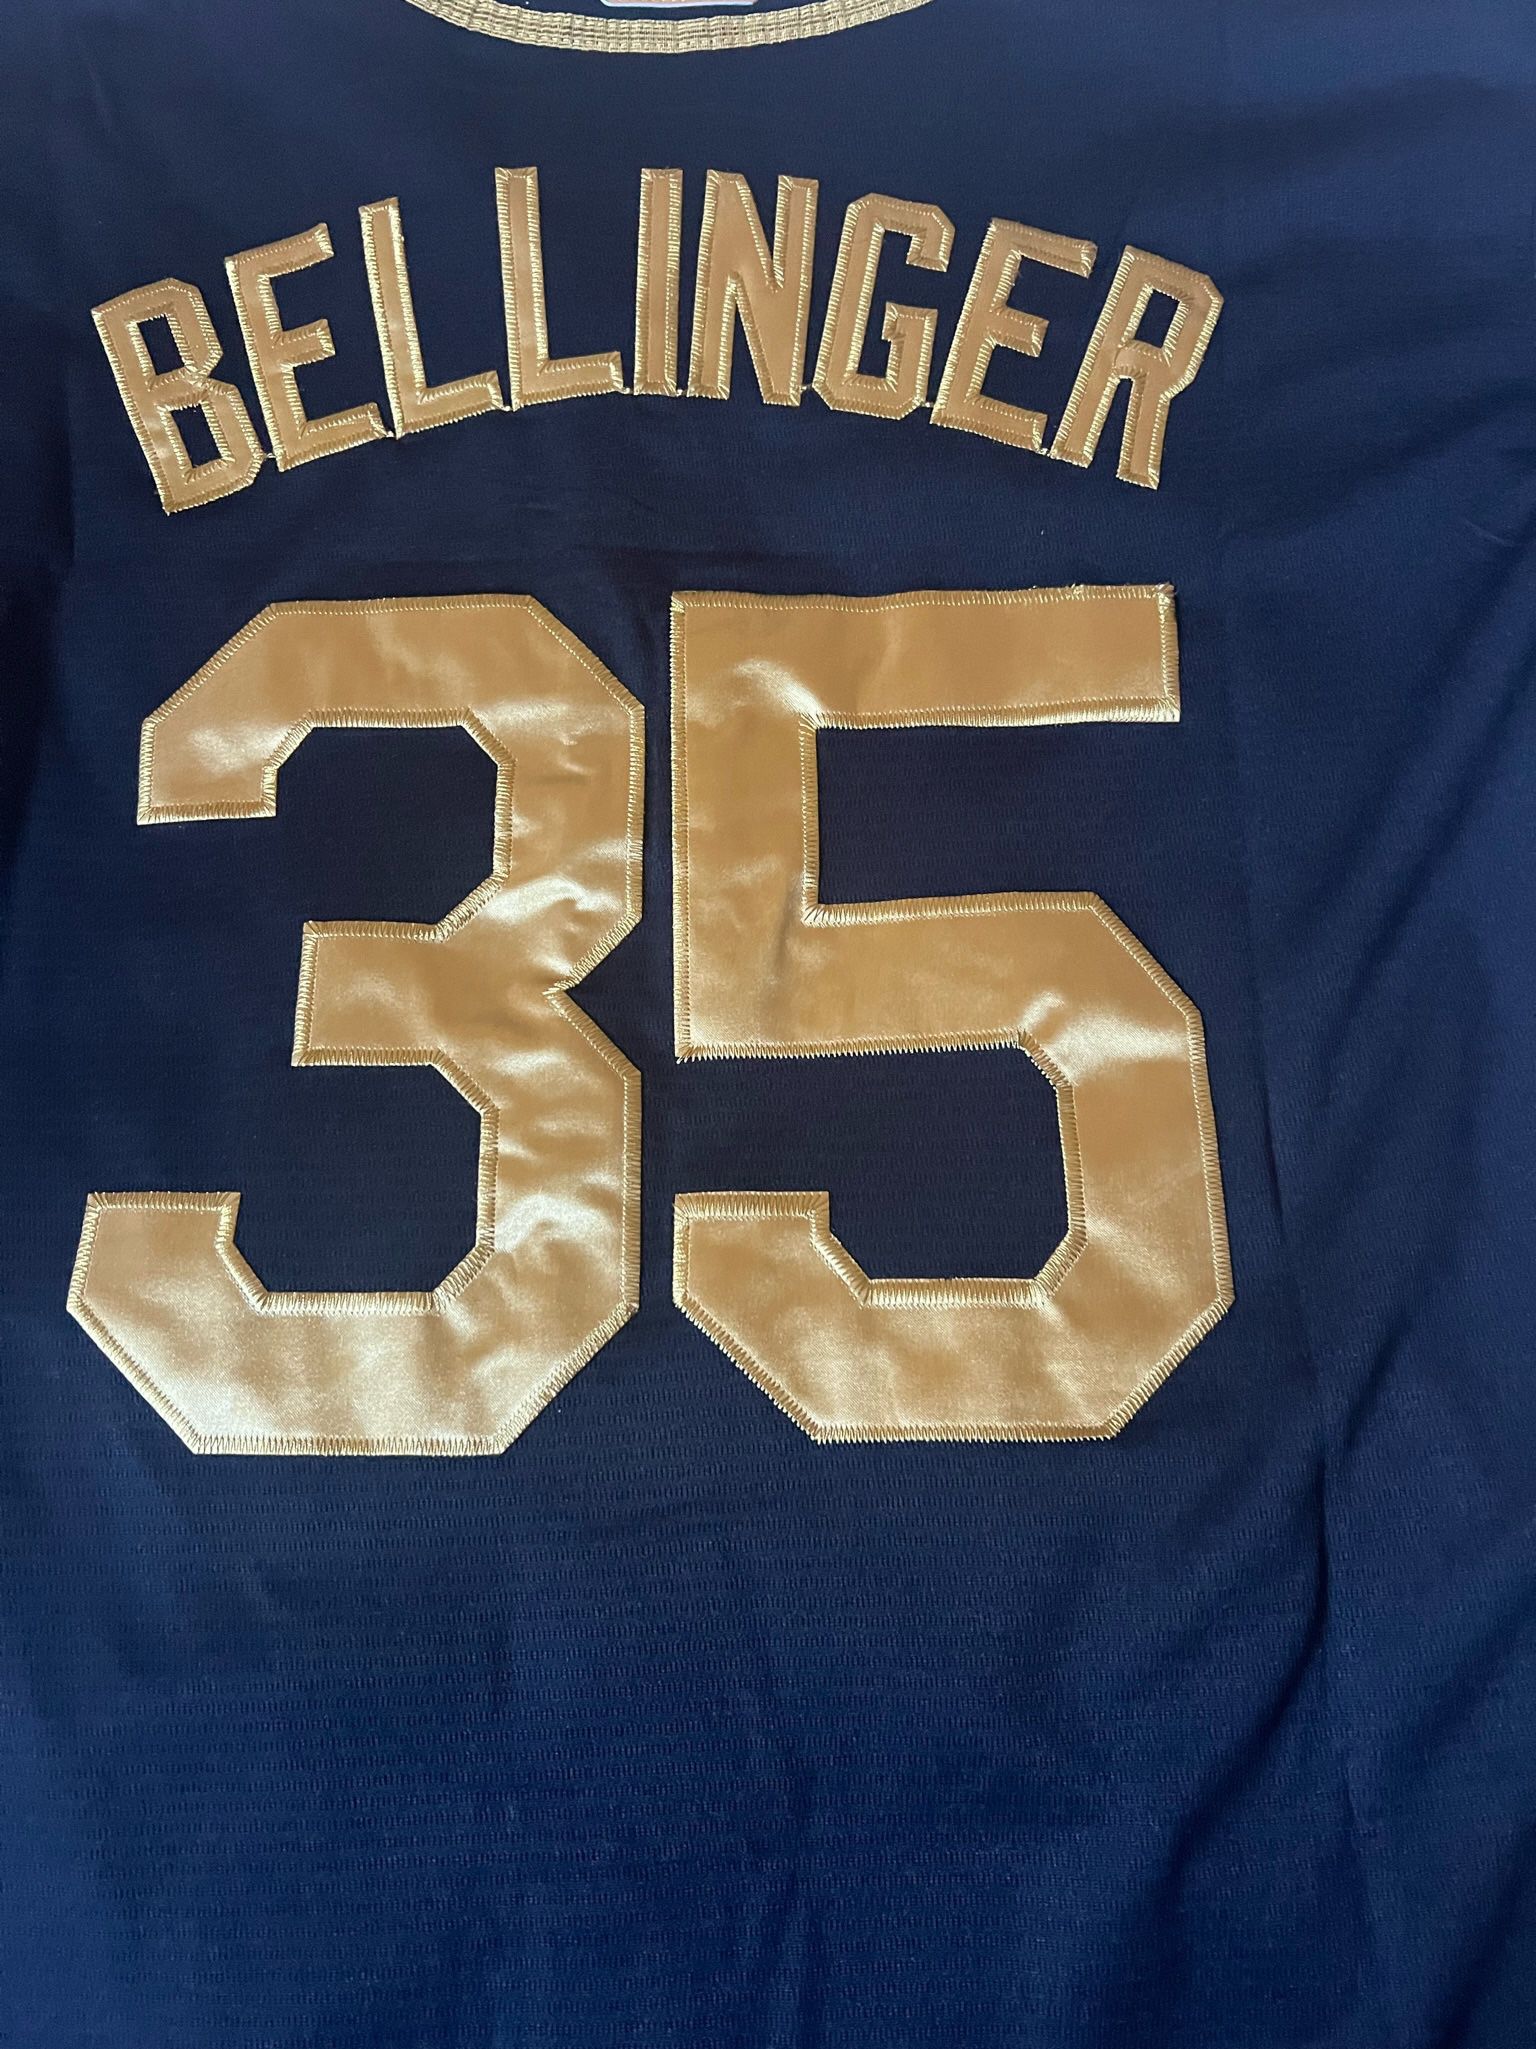 Authentic Majestic Cody Bellinger Dodgers Jersey - Depop